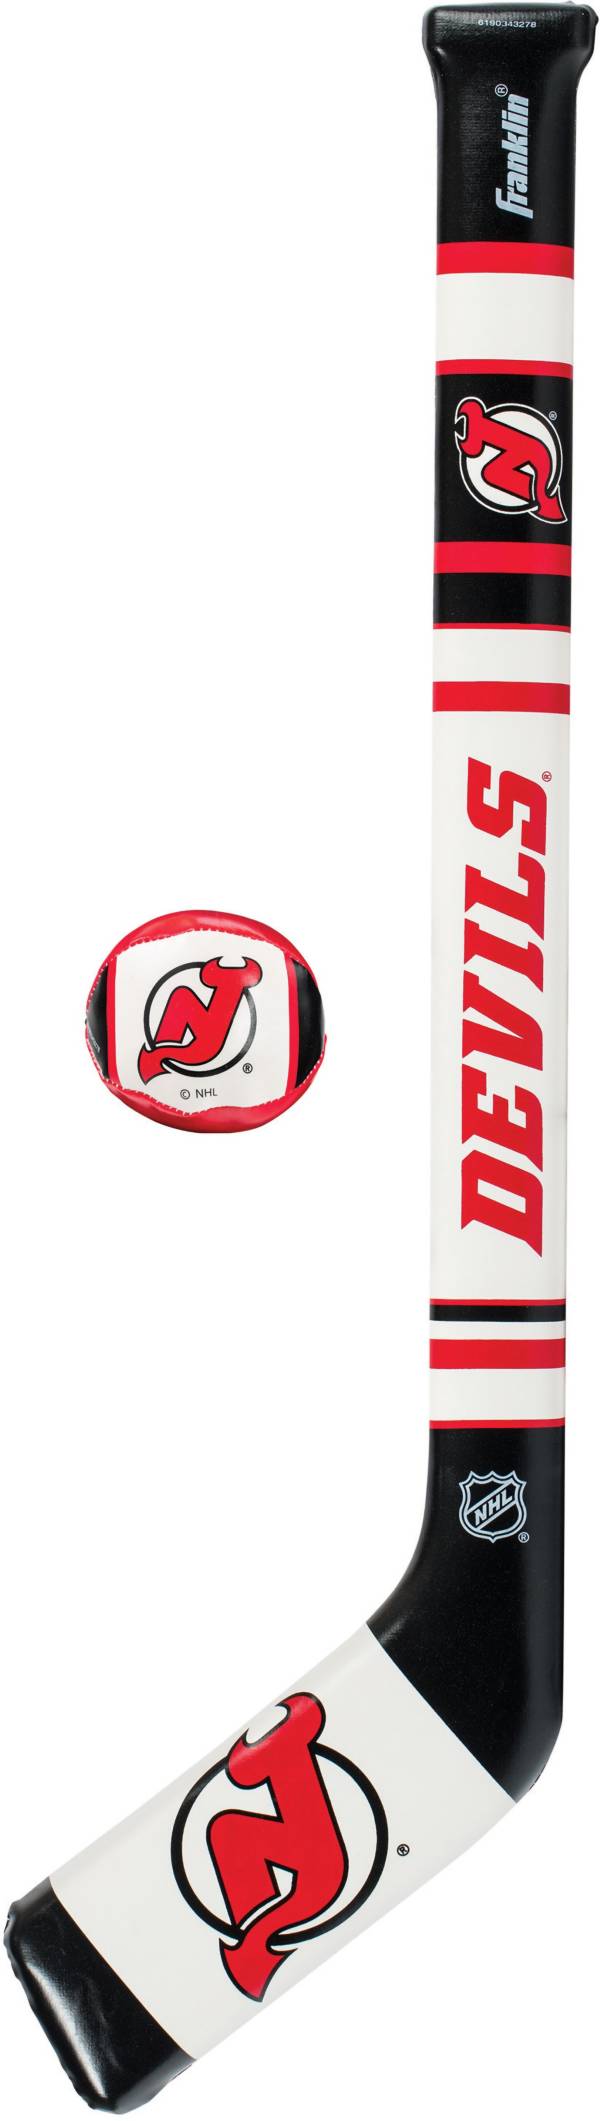 Franklin New Jersey Devils Mini Hockey Set product image